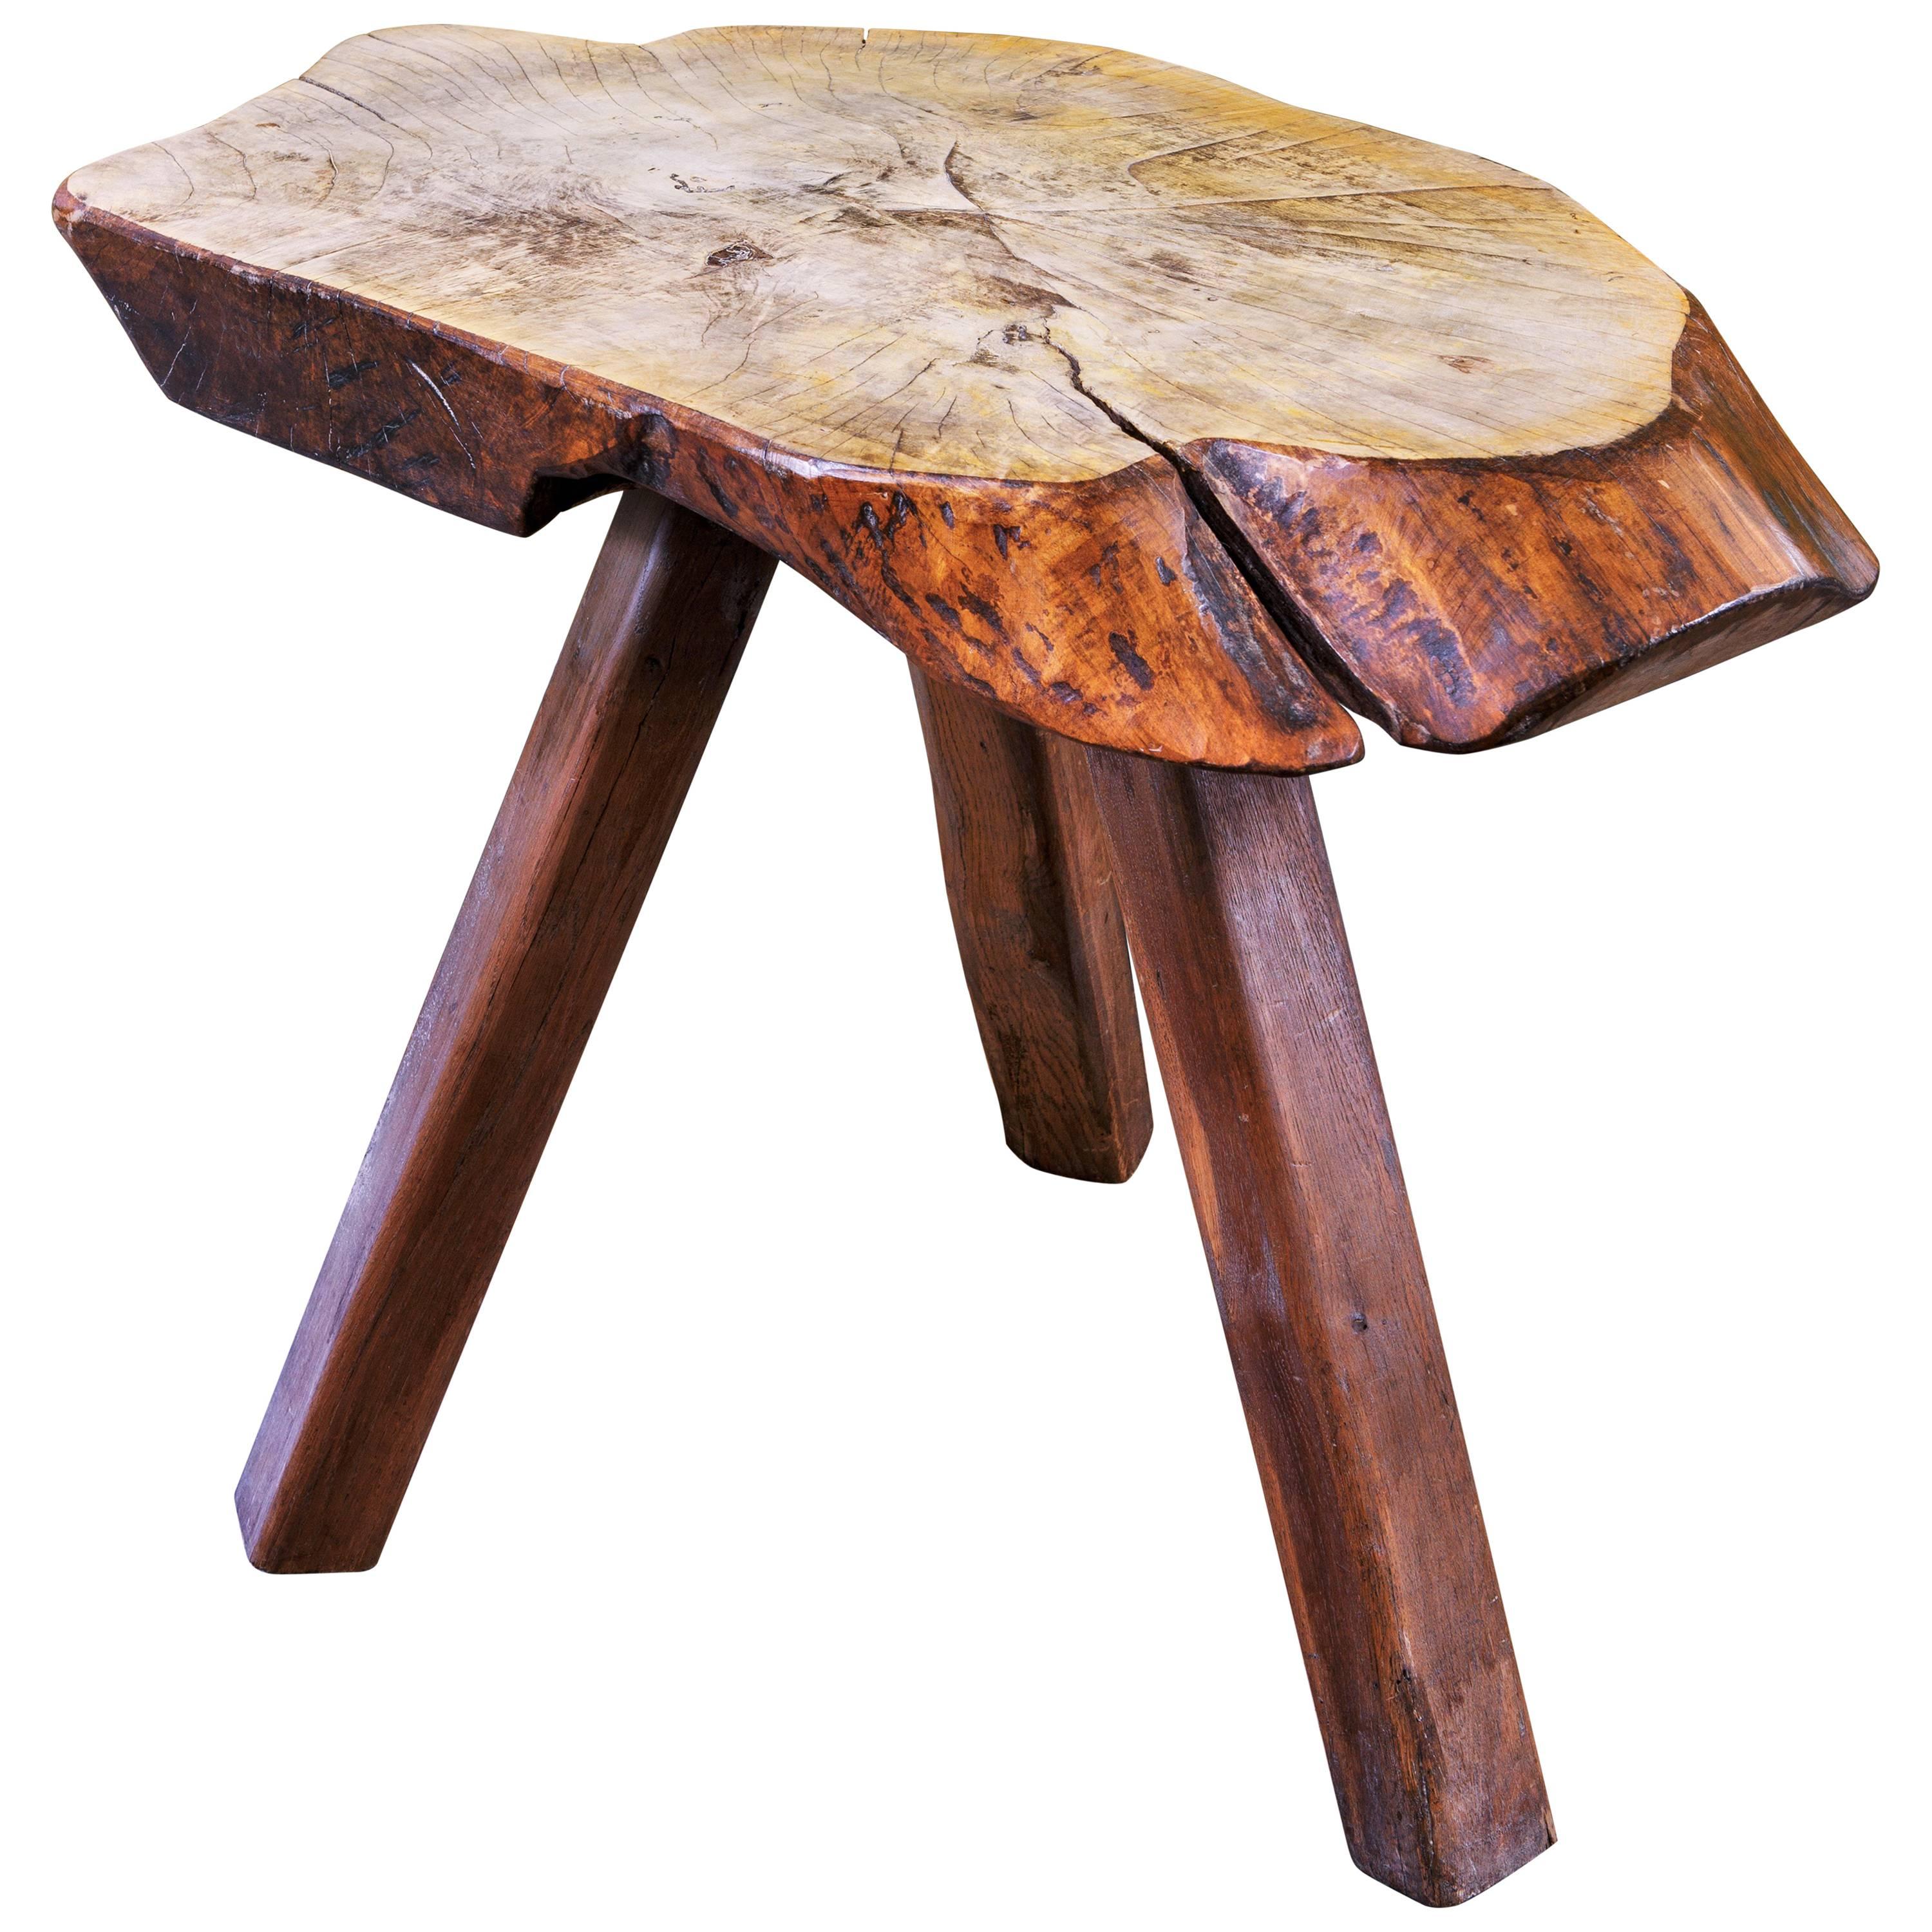 Rustic Live Edge Wood Slab Table with Three Legs